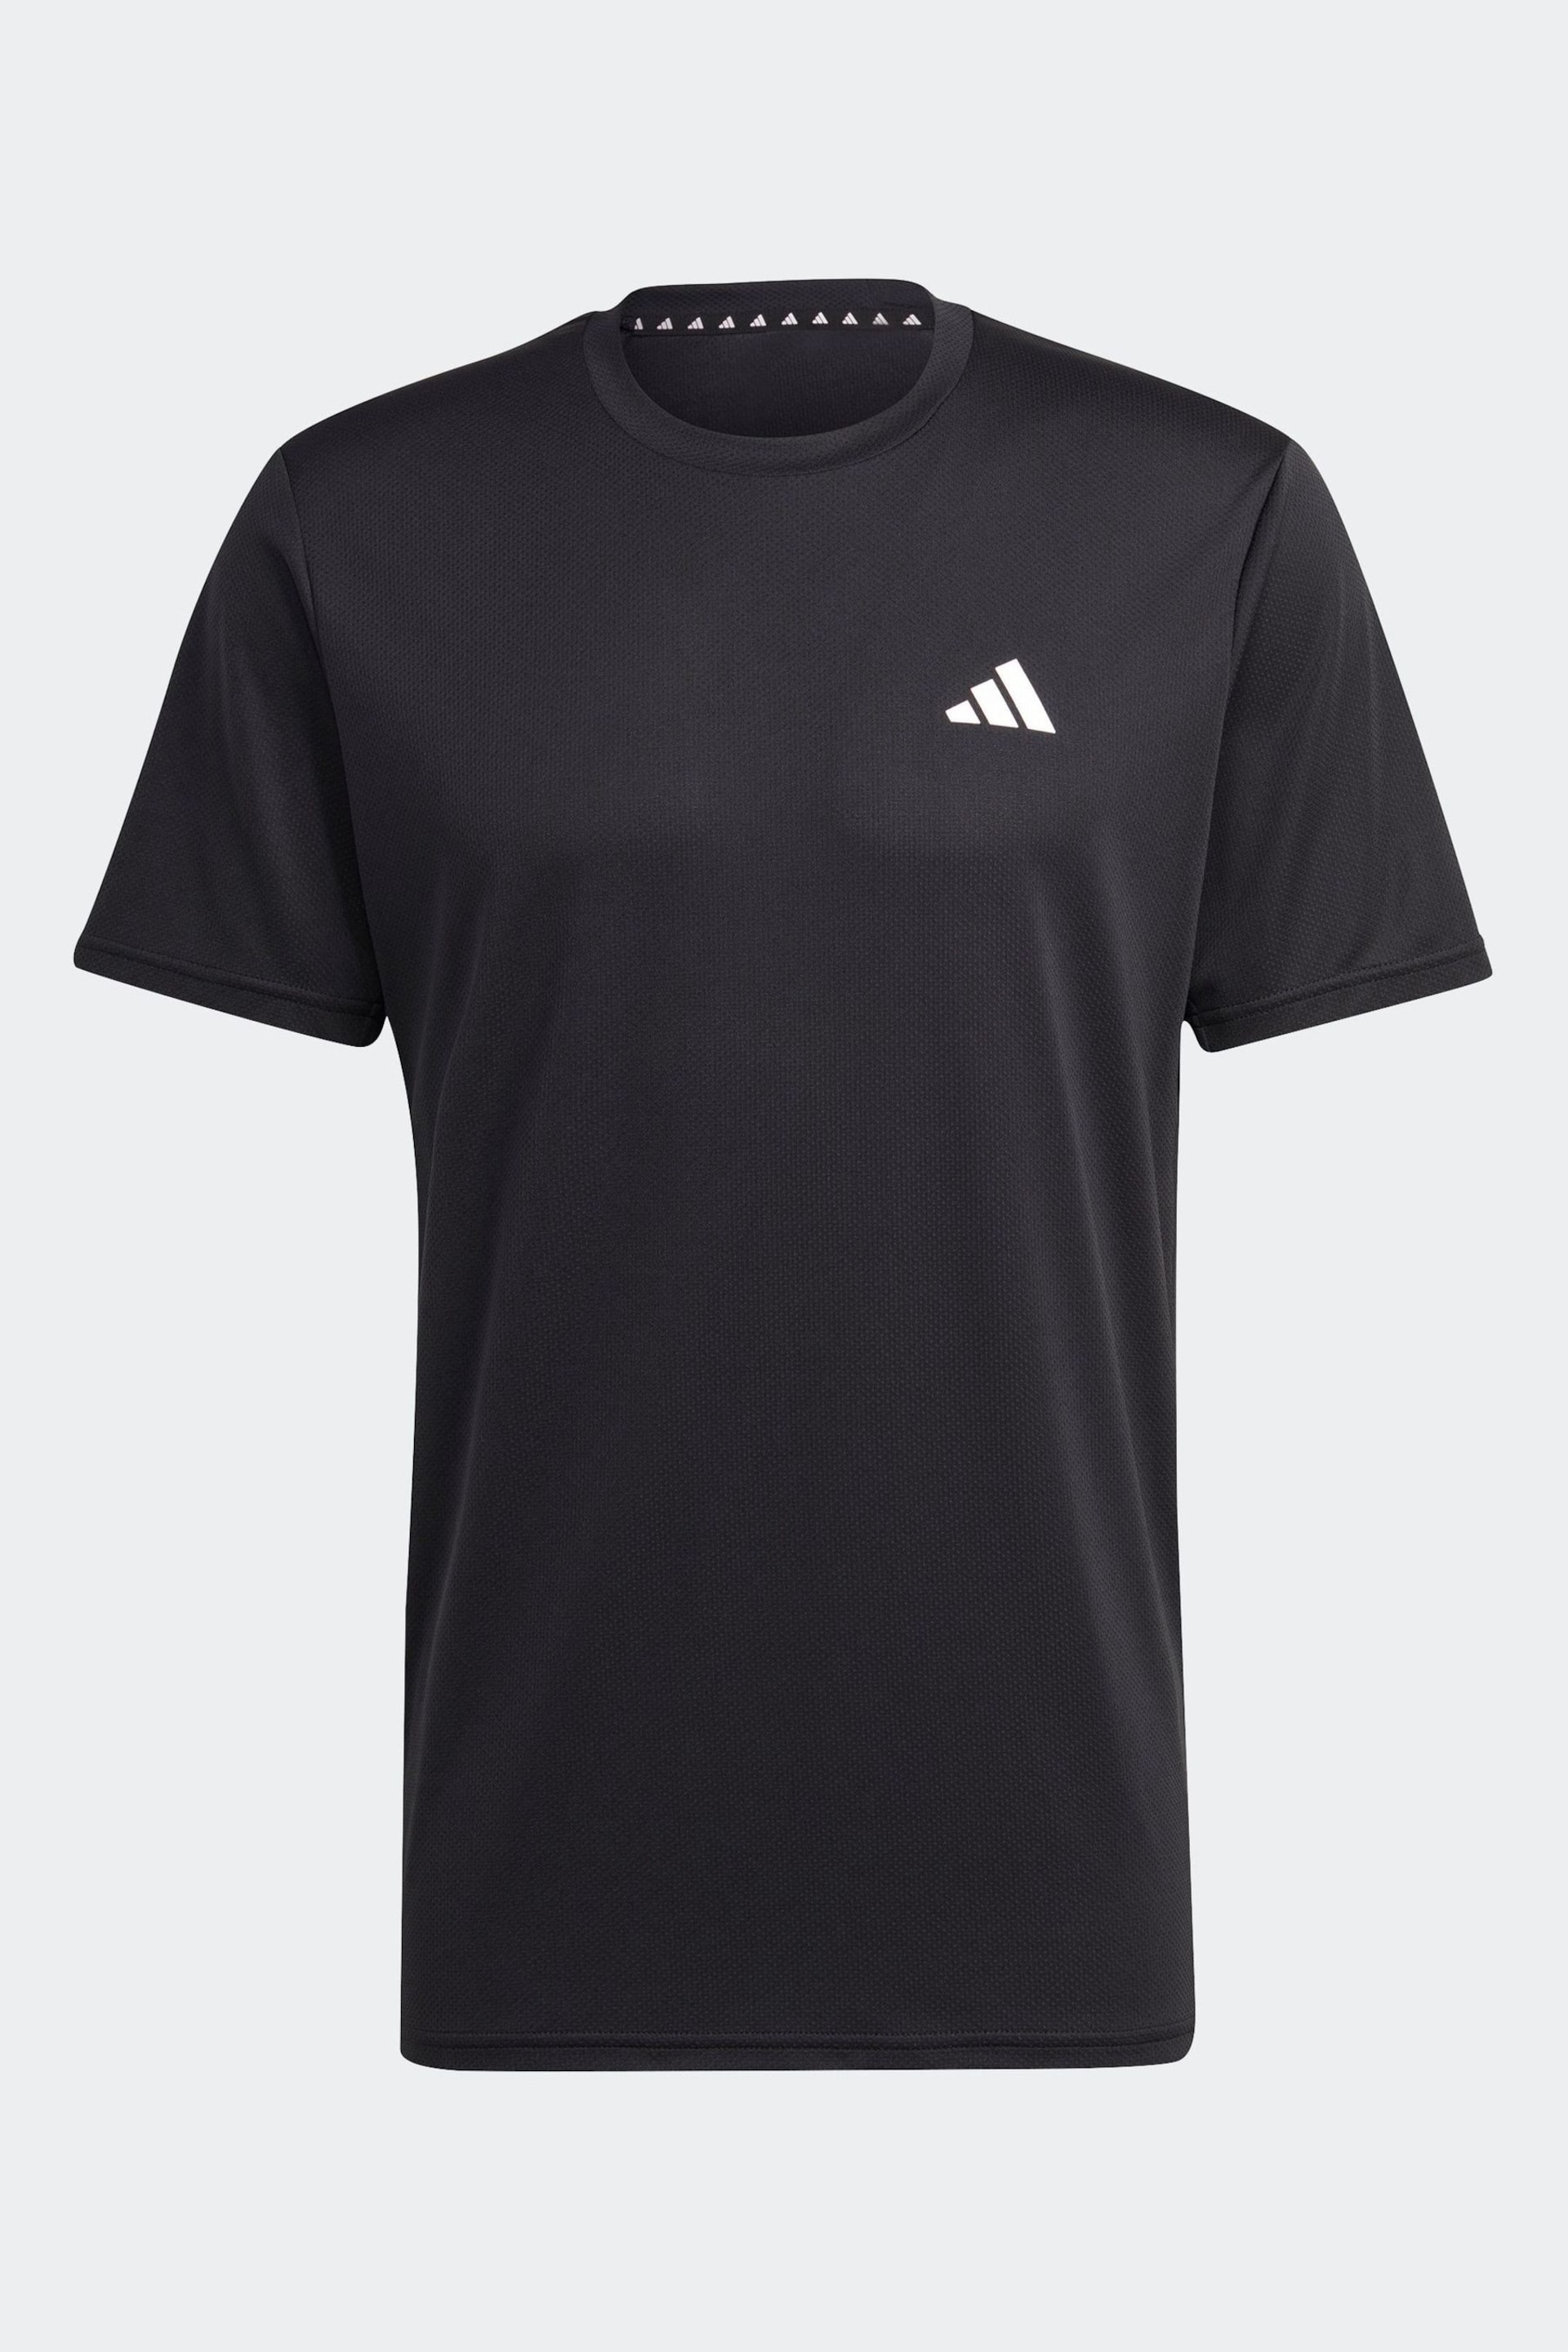 adidas Black Train Essentials Training T-Shirt - Image 6 of 6